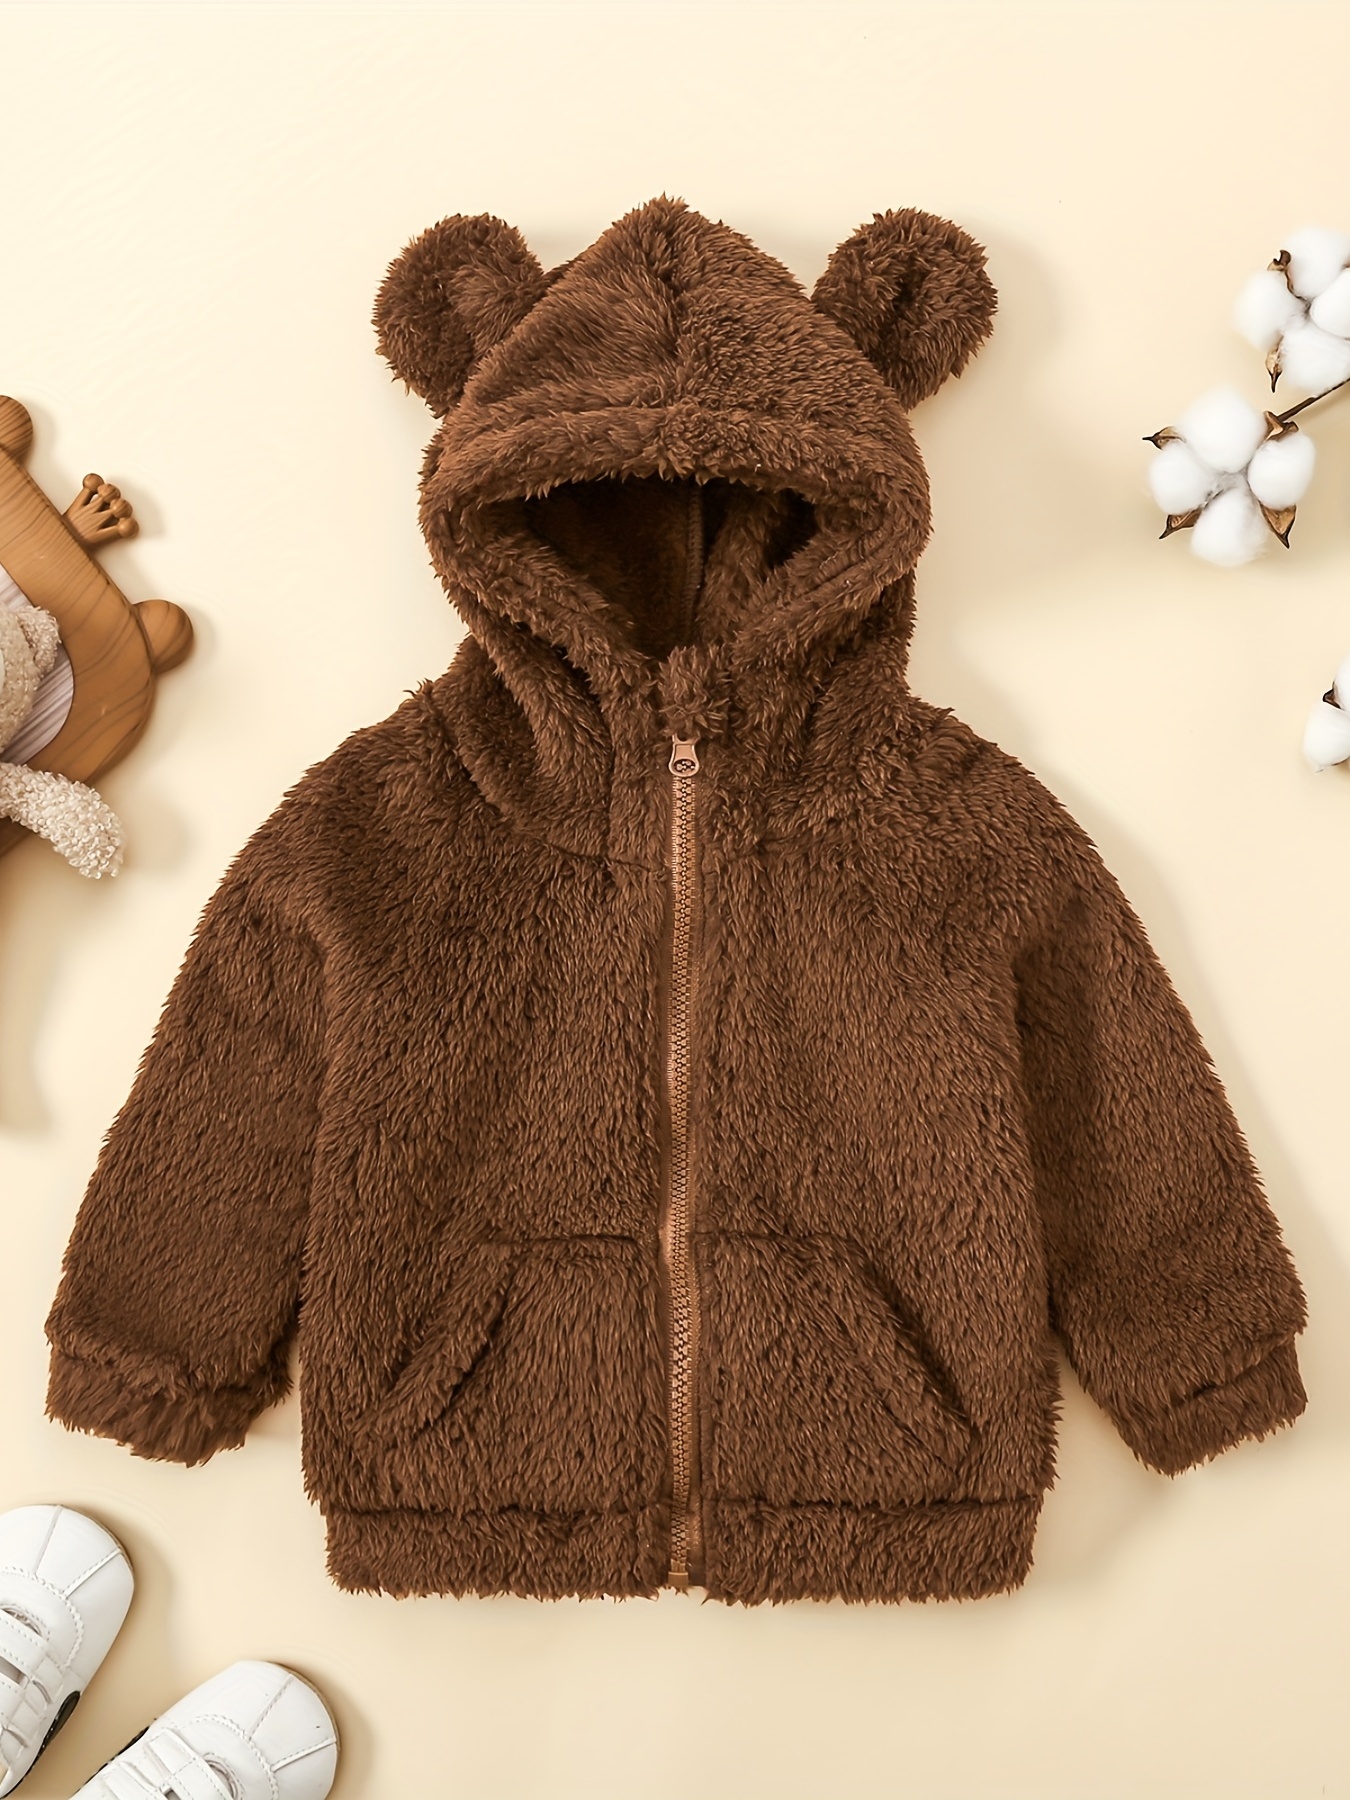 Unisex Babies Fleece Coat Little Baby Boy Girls Cute Bear Ears Hooded  Zipper Jackets Toddler Fall Winter Outerwear